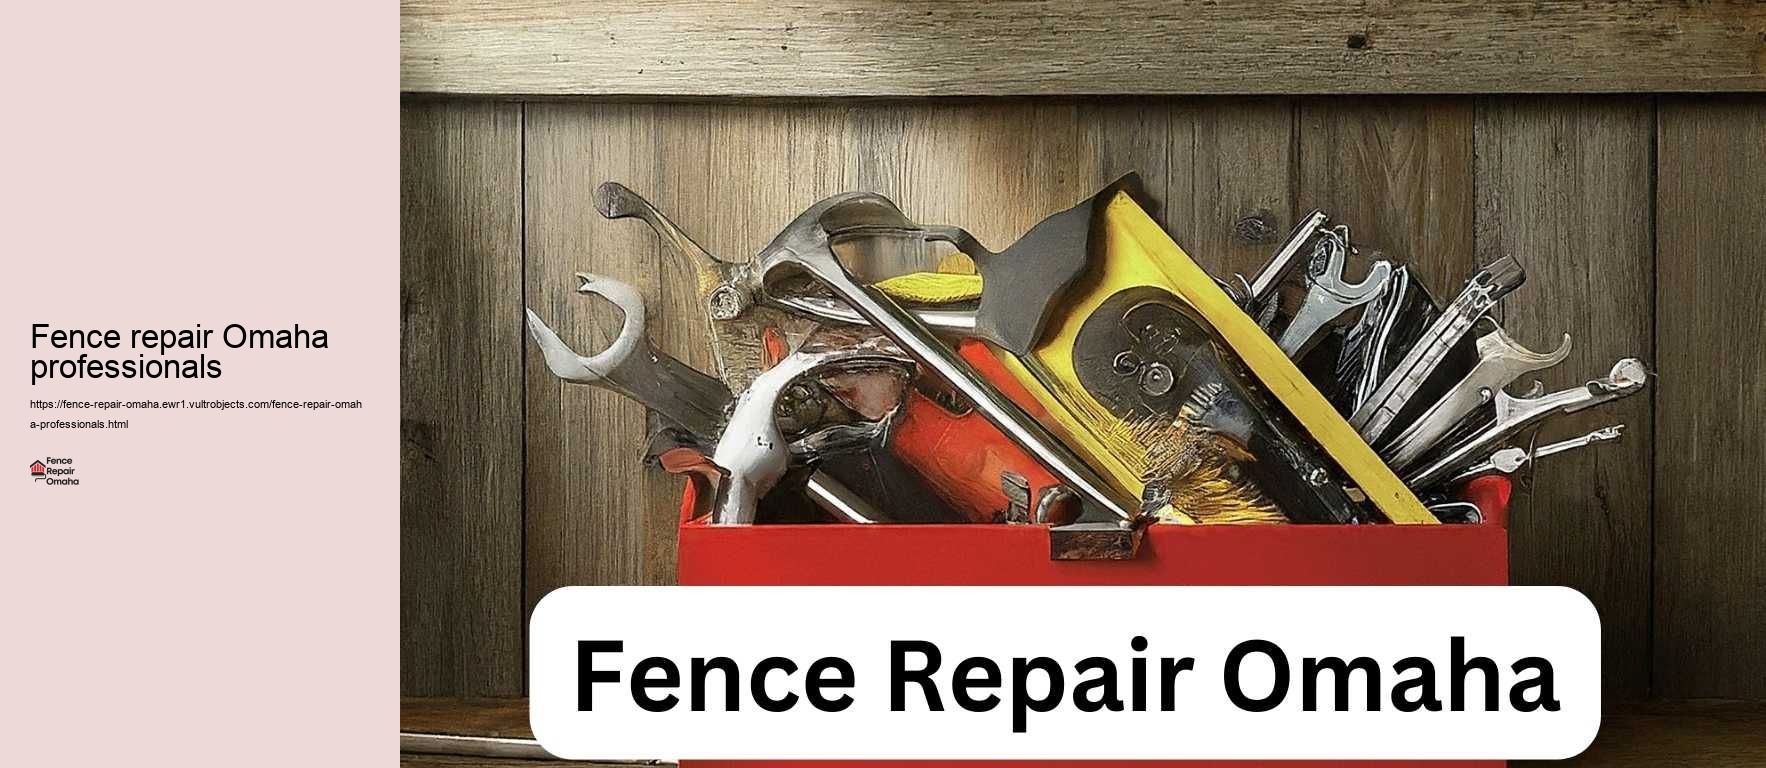 Fence repair Omaha professionals